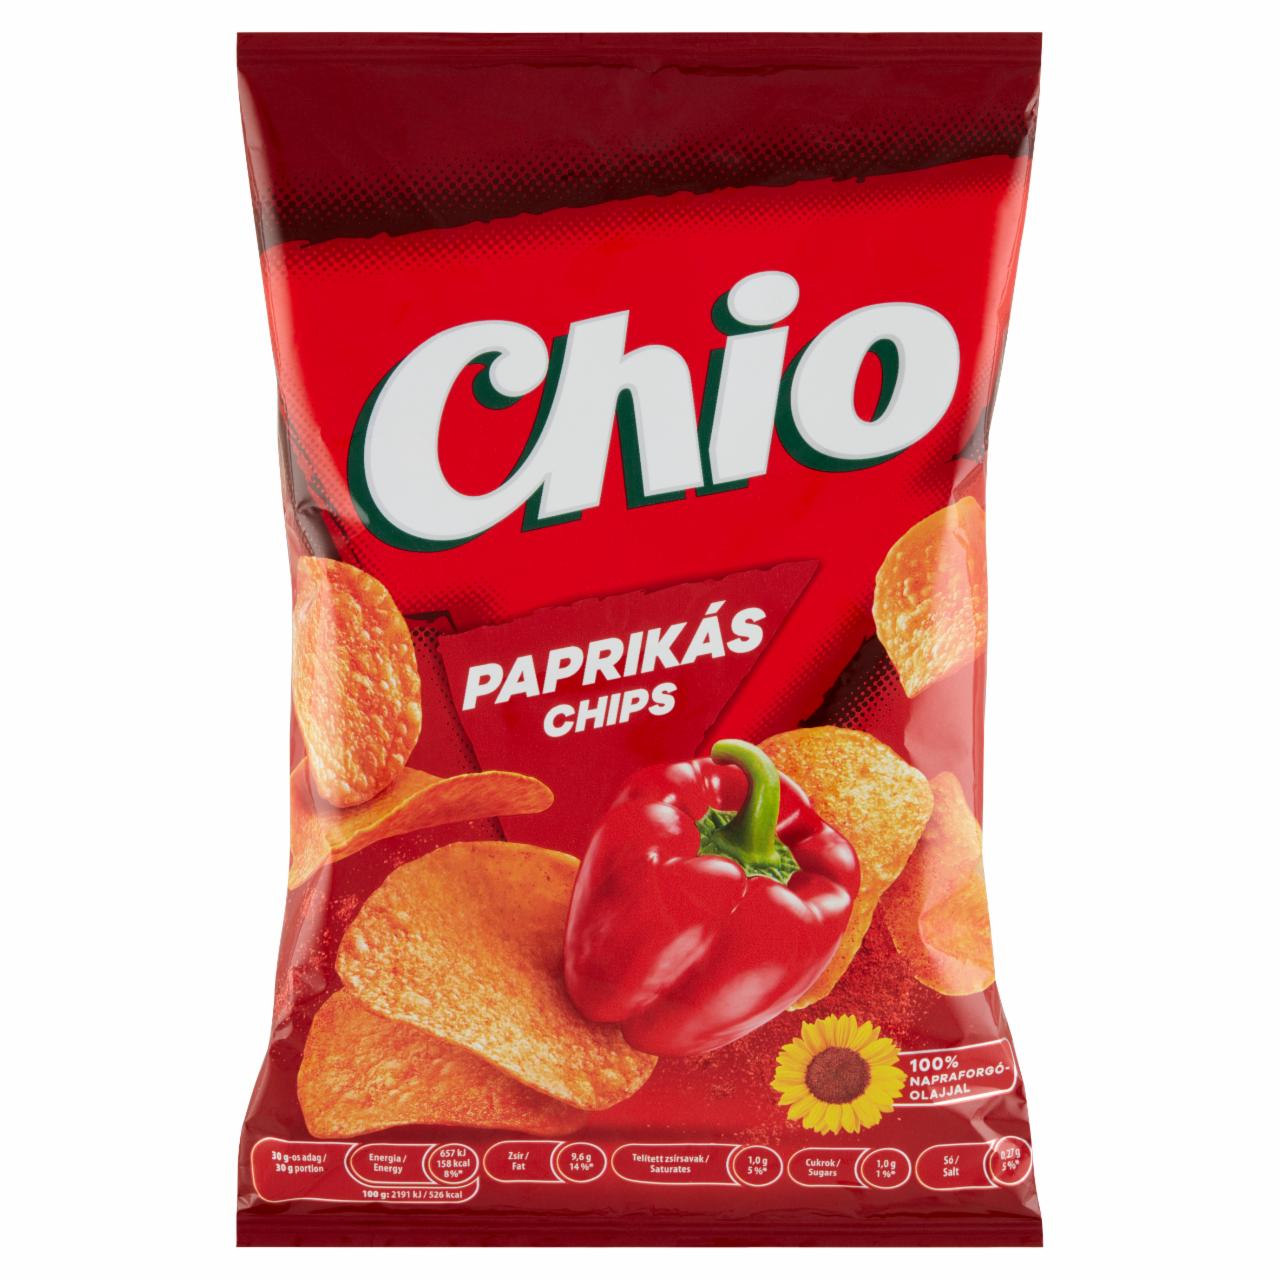 Képek - Paprikás chips Chio